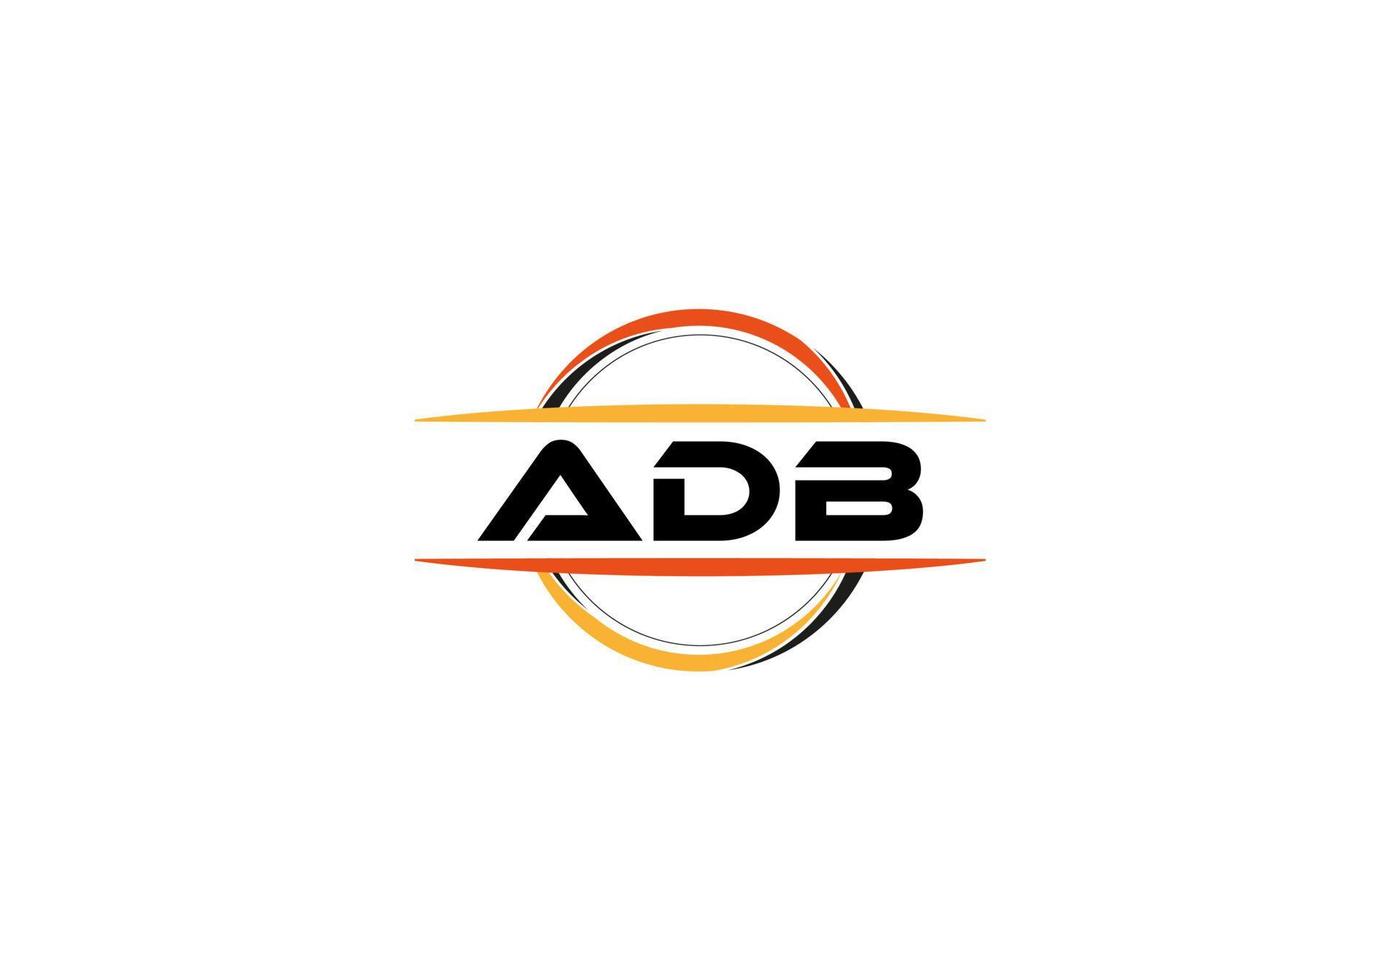 adb letra realeza mandala forma logo. adb cepillo Arte logo. adb logo para un compañía, negocio, y comercial usar. vector